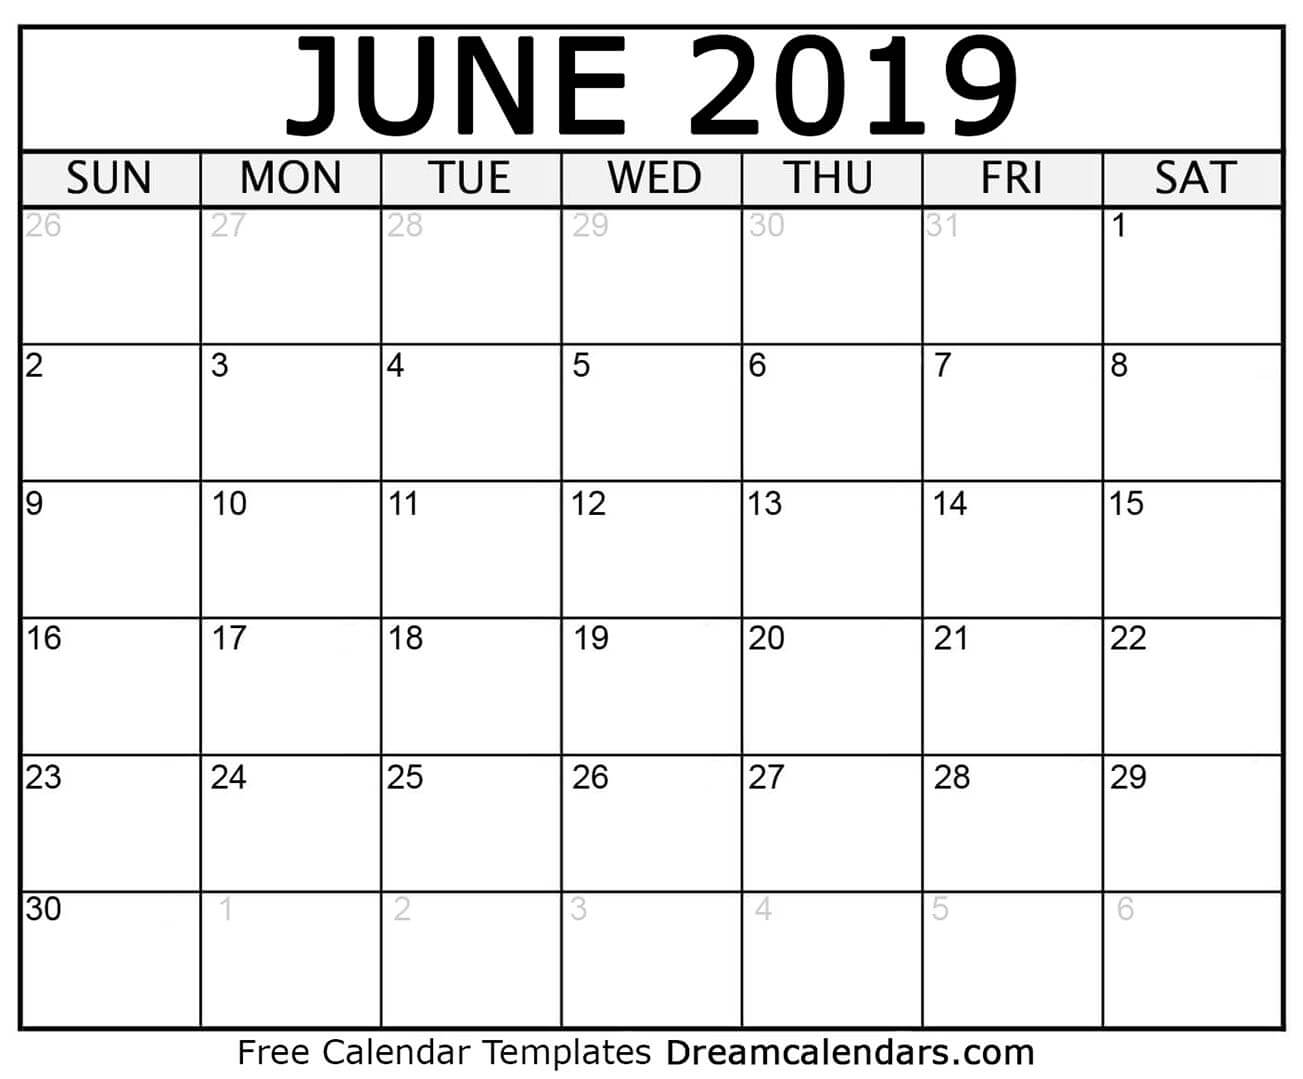 June 2019 calendar free blank printable templates